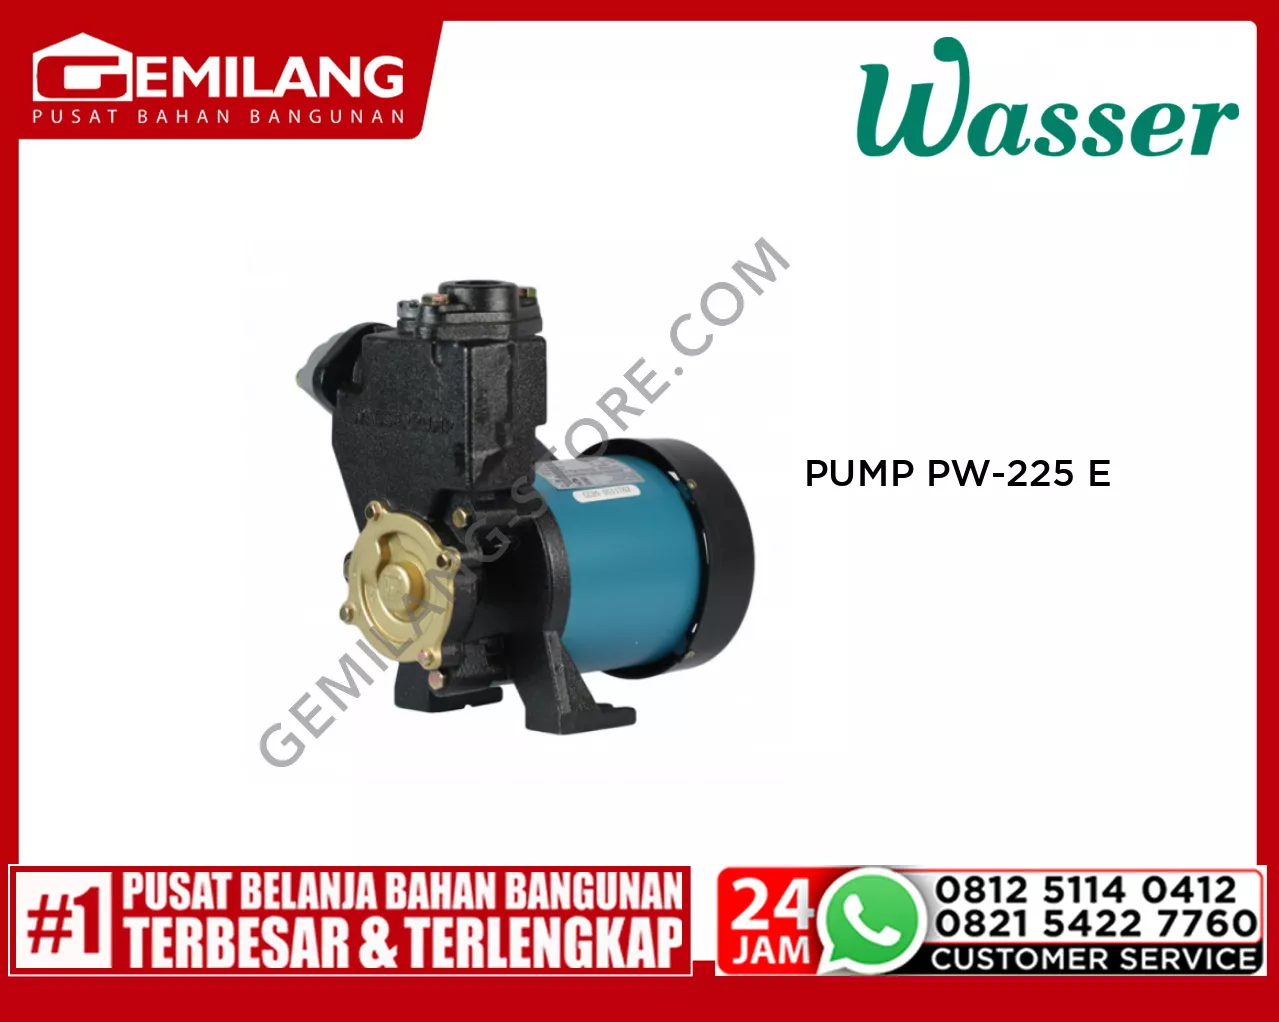 WASSER PUMP PW-225 E